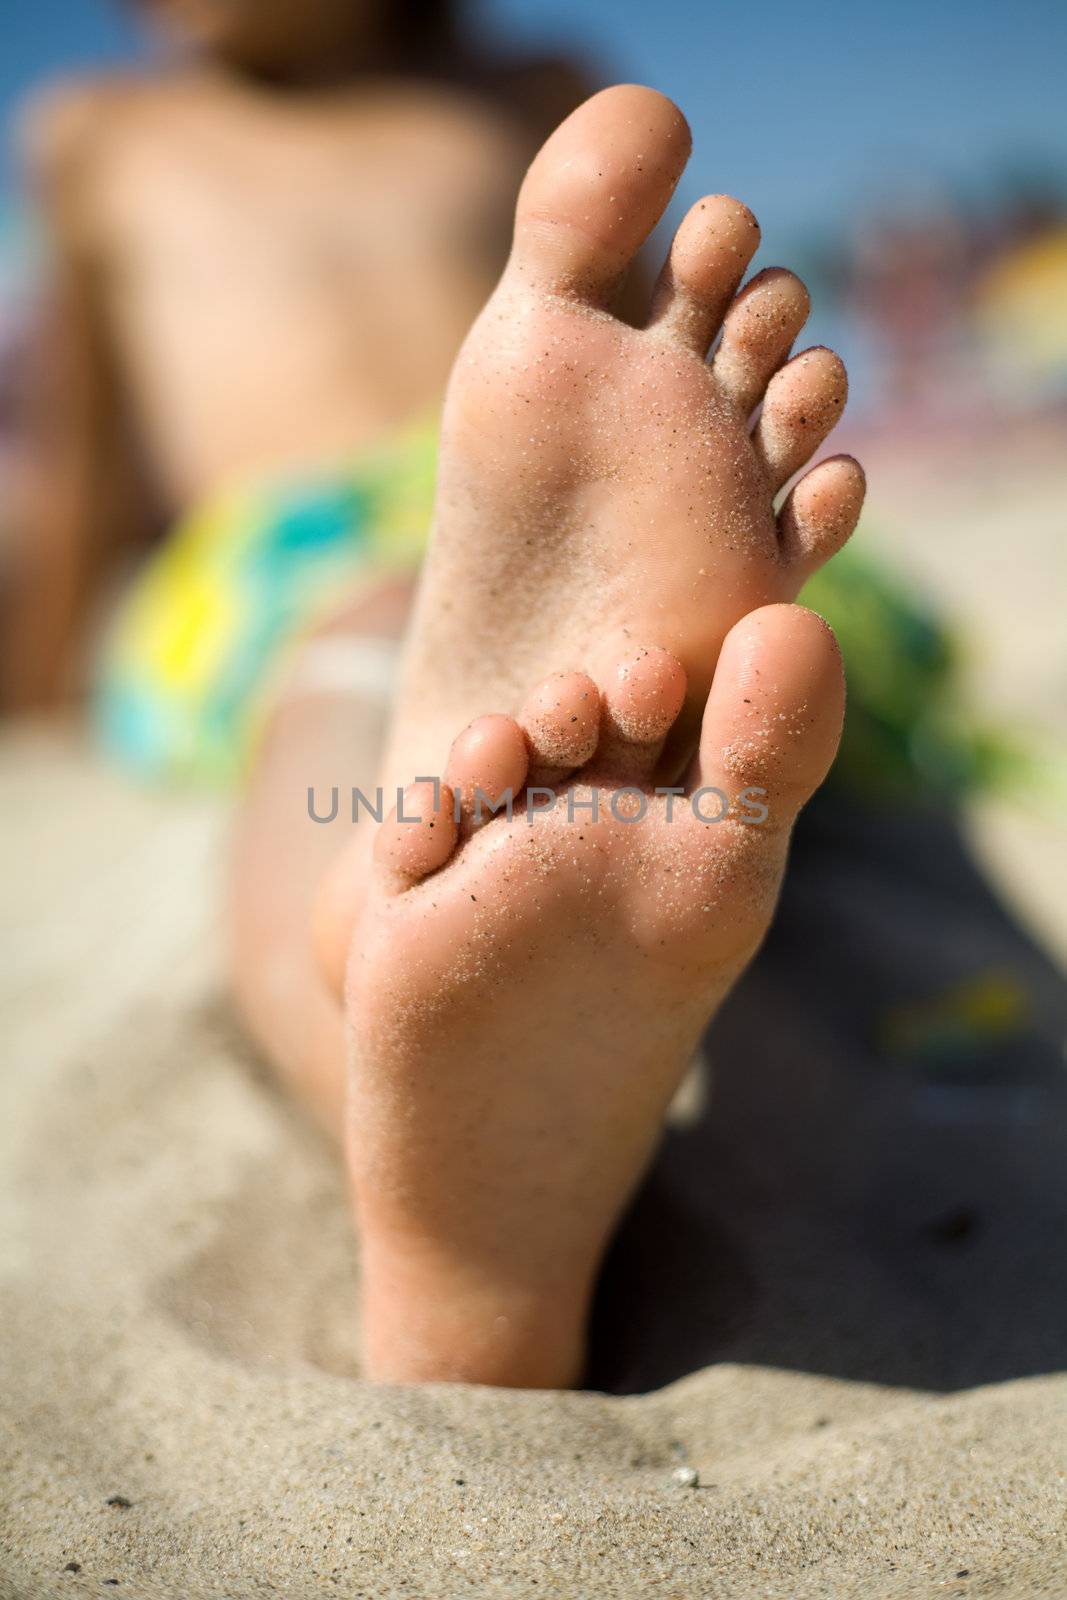 An image of nice feet on the sand